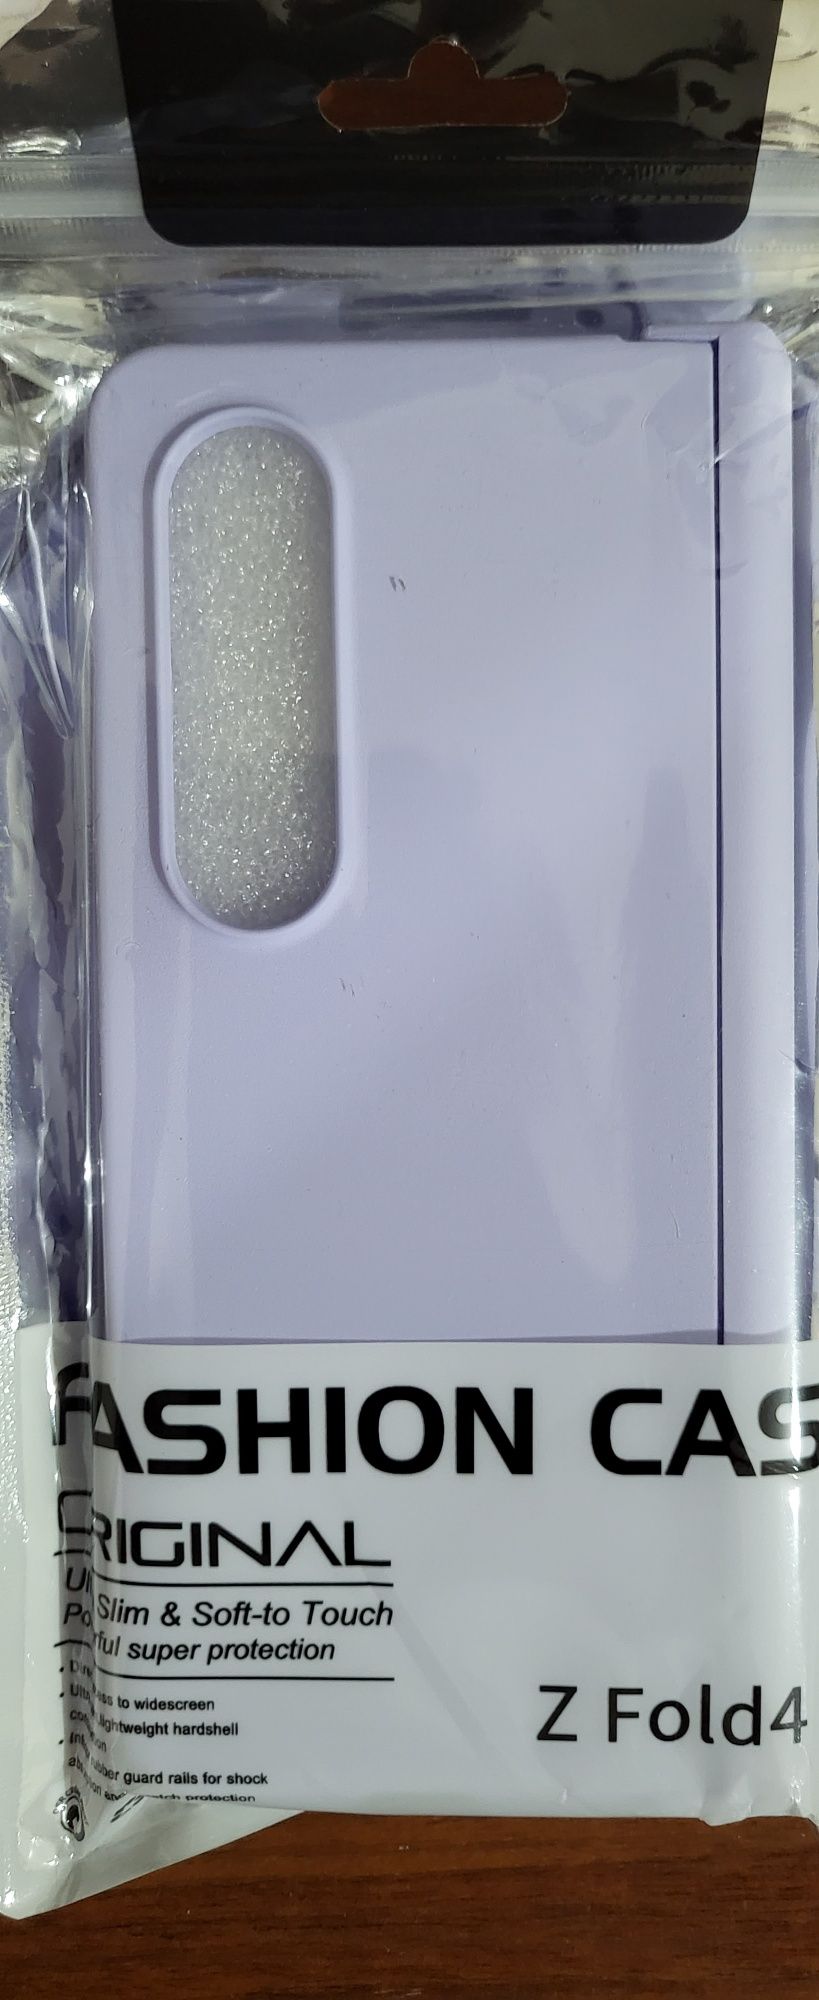 Чехлы для Samsung Galaxy Z Fold 3 и 4 
с 3 элементами